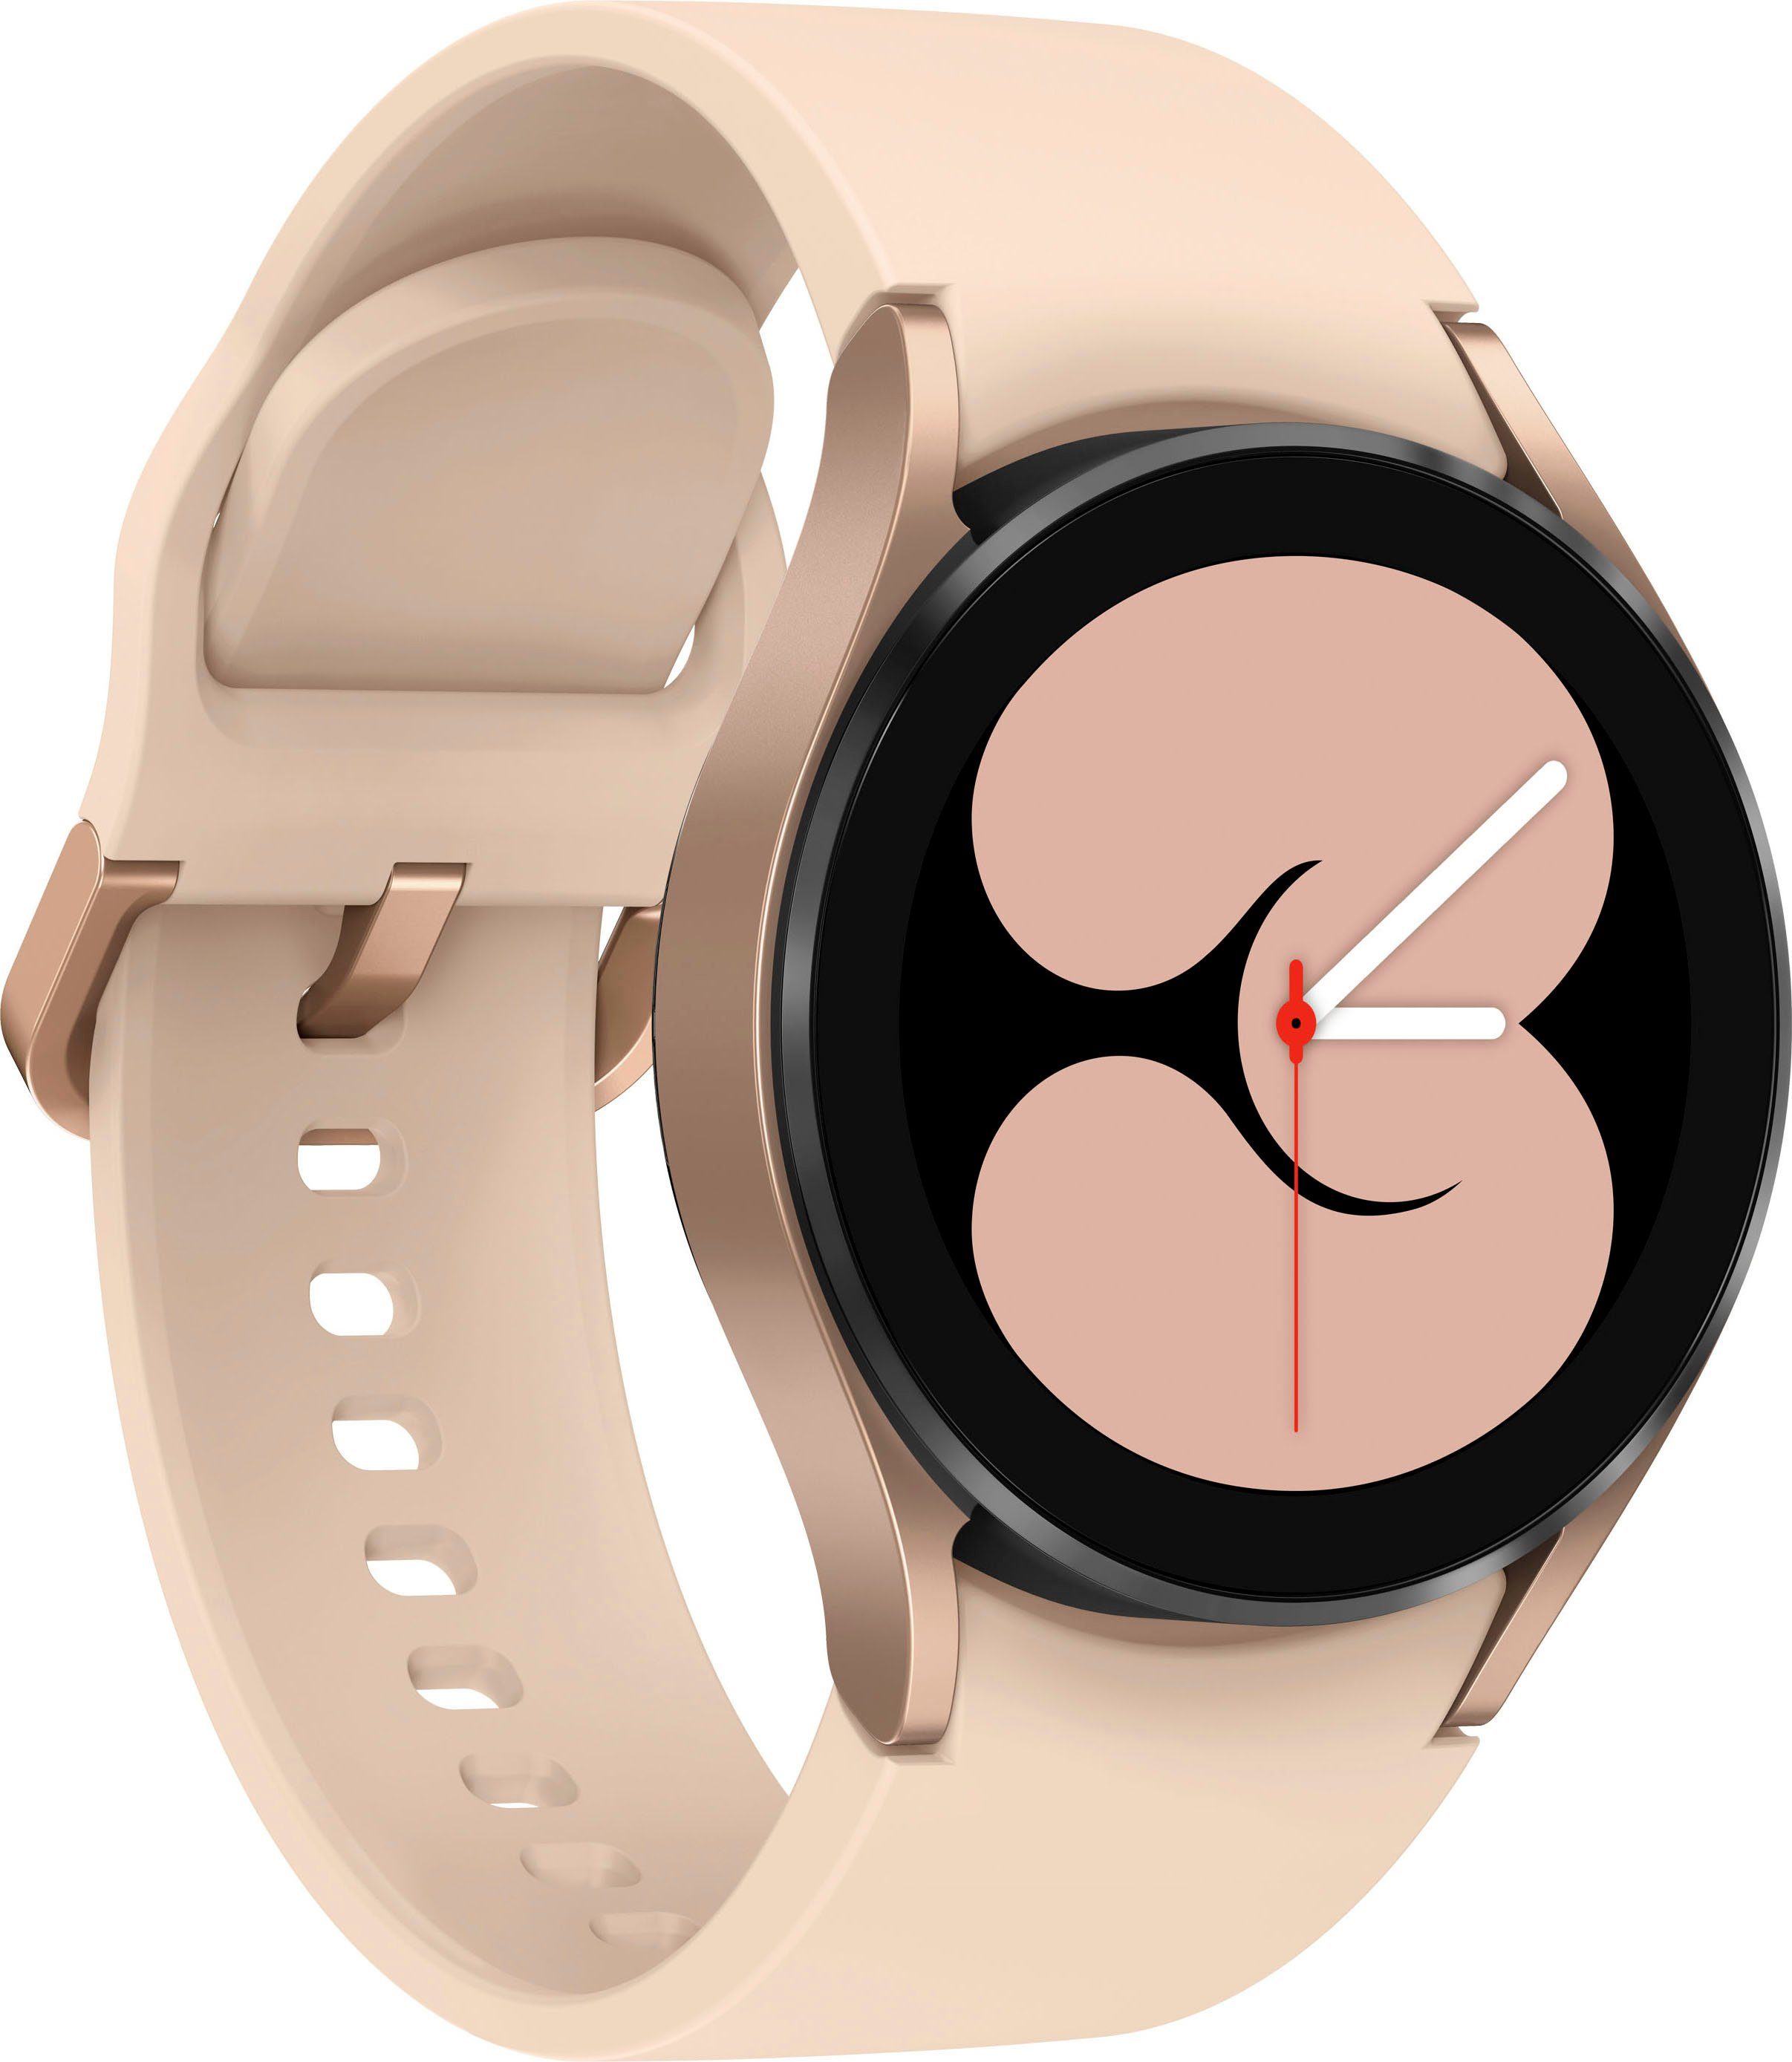 Samsung Galaxy Watch 4-40mm BT Zoll, OS Fitness Wear Uhr, Smartwatch Tracker, Fitness (1,2 by Google), Gesundheitsfunktionen